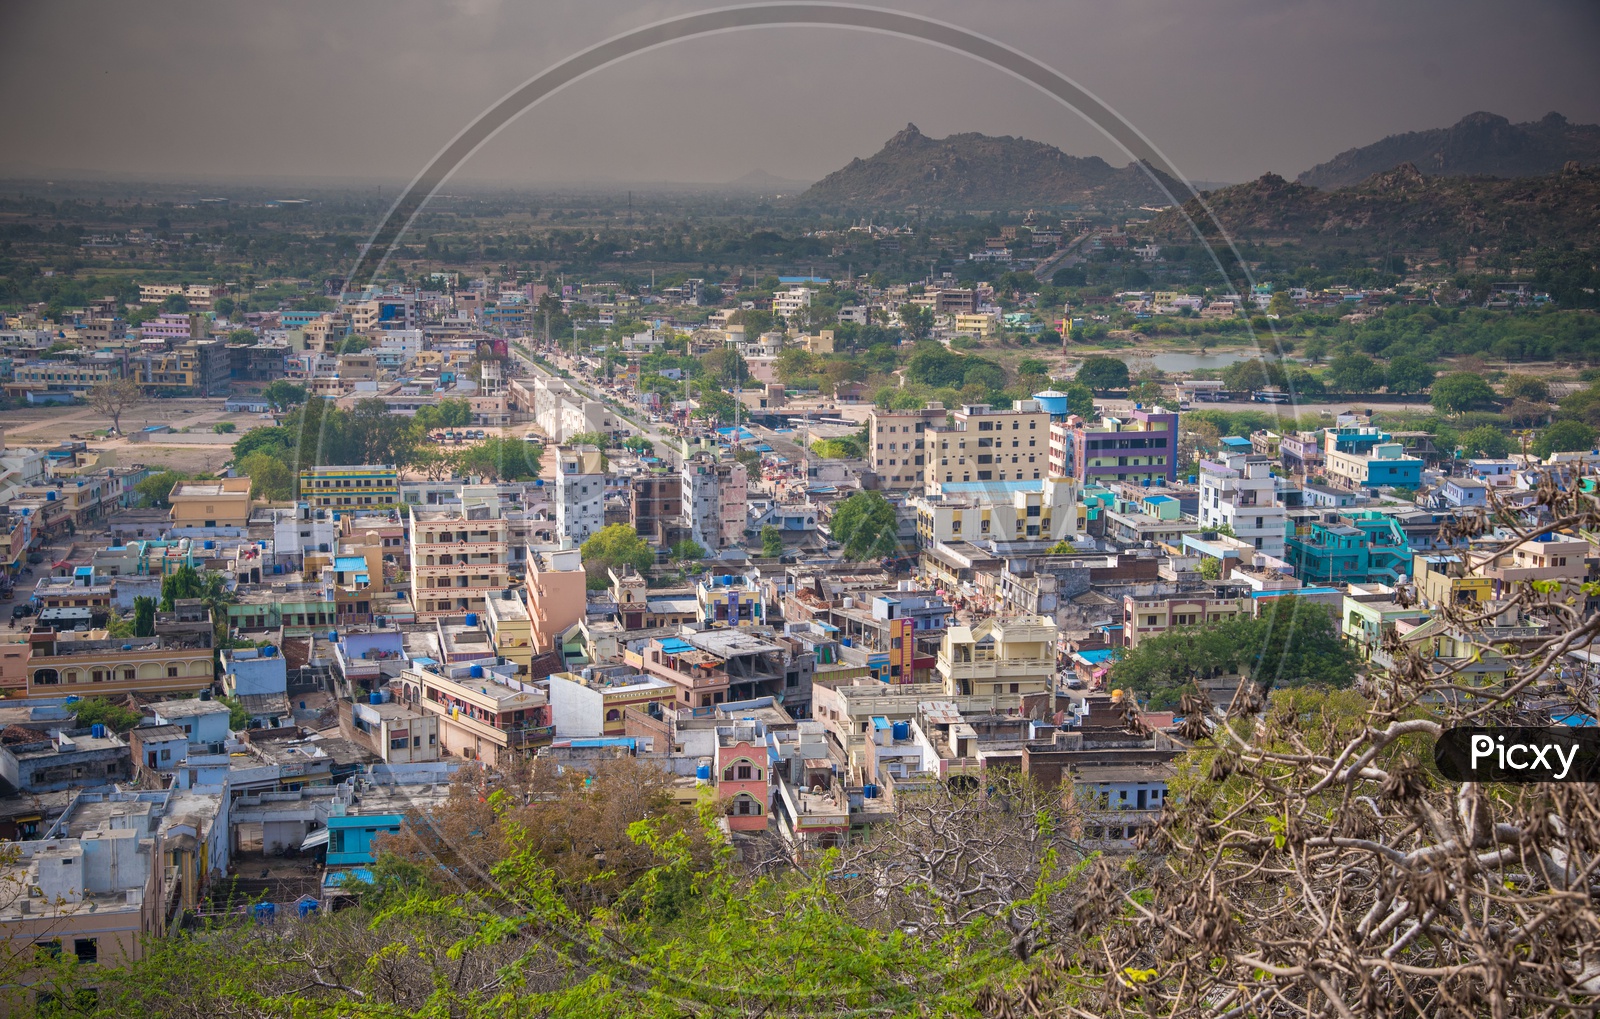 Yadagiri town hilltop view with Raigiri in the background